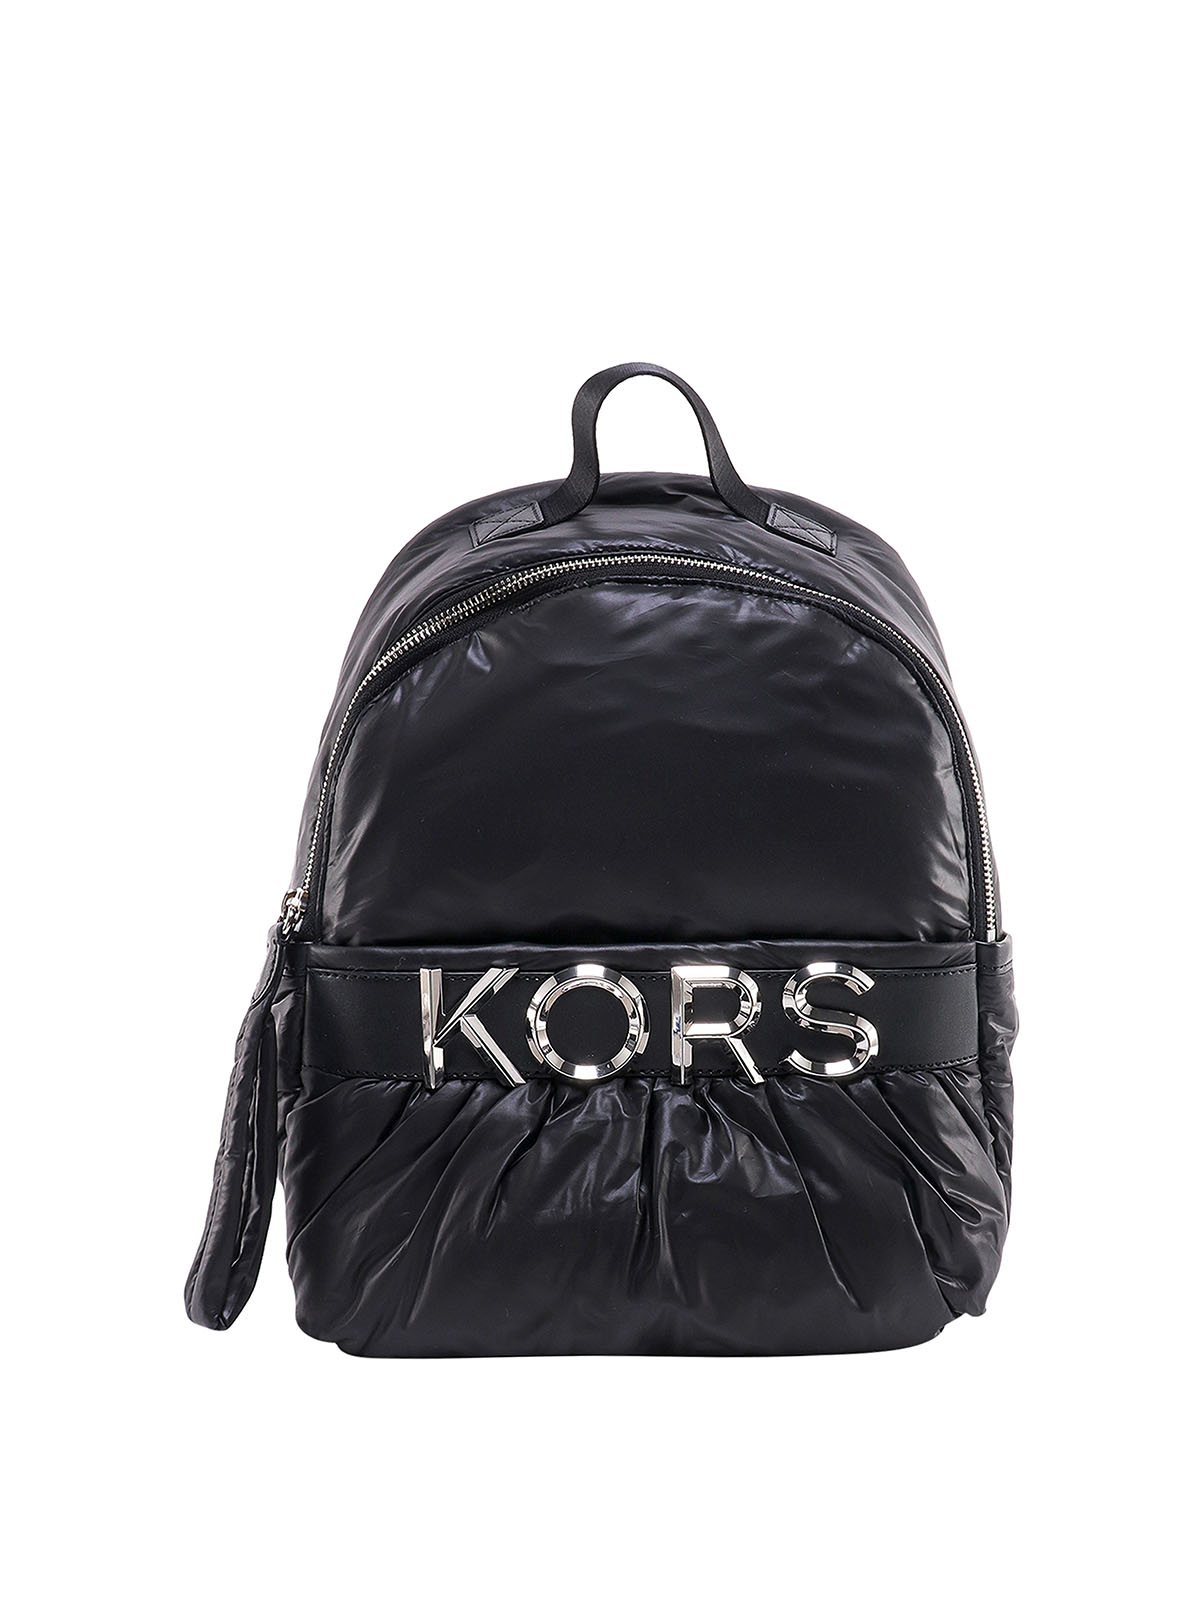 Backpacks Michael Kors - Nylon backpack with metal kors logo - 30R3S3LB2B001